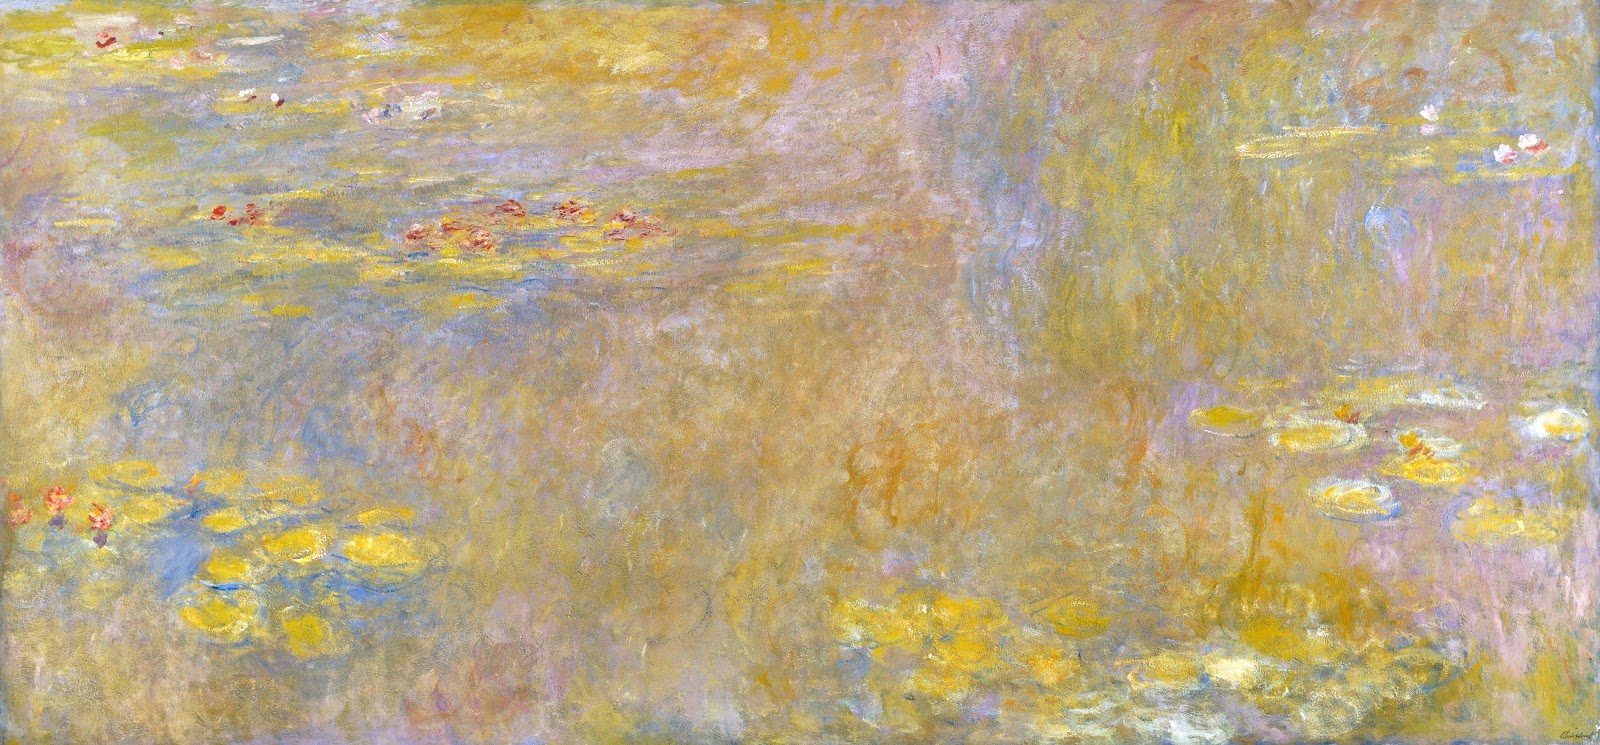 Claude+Monet-1840-1926 (685).jpg